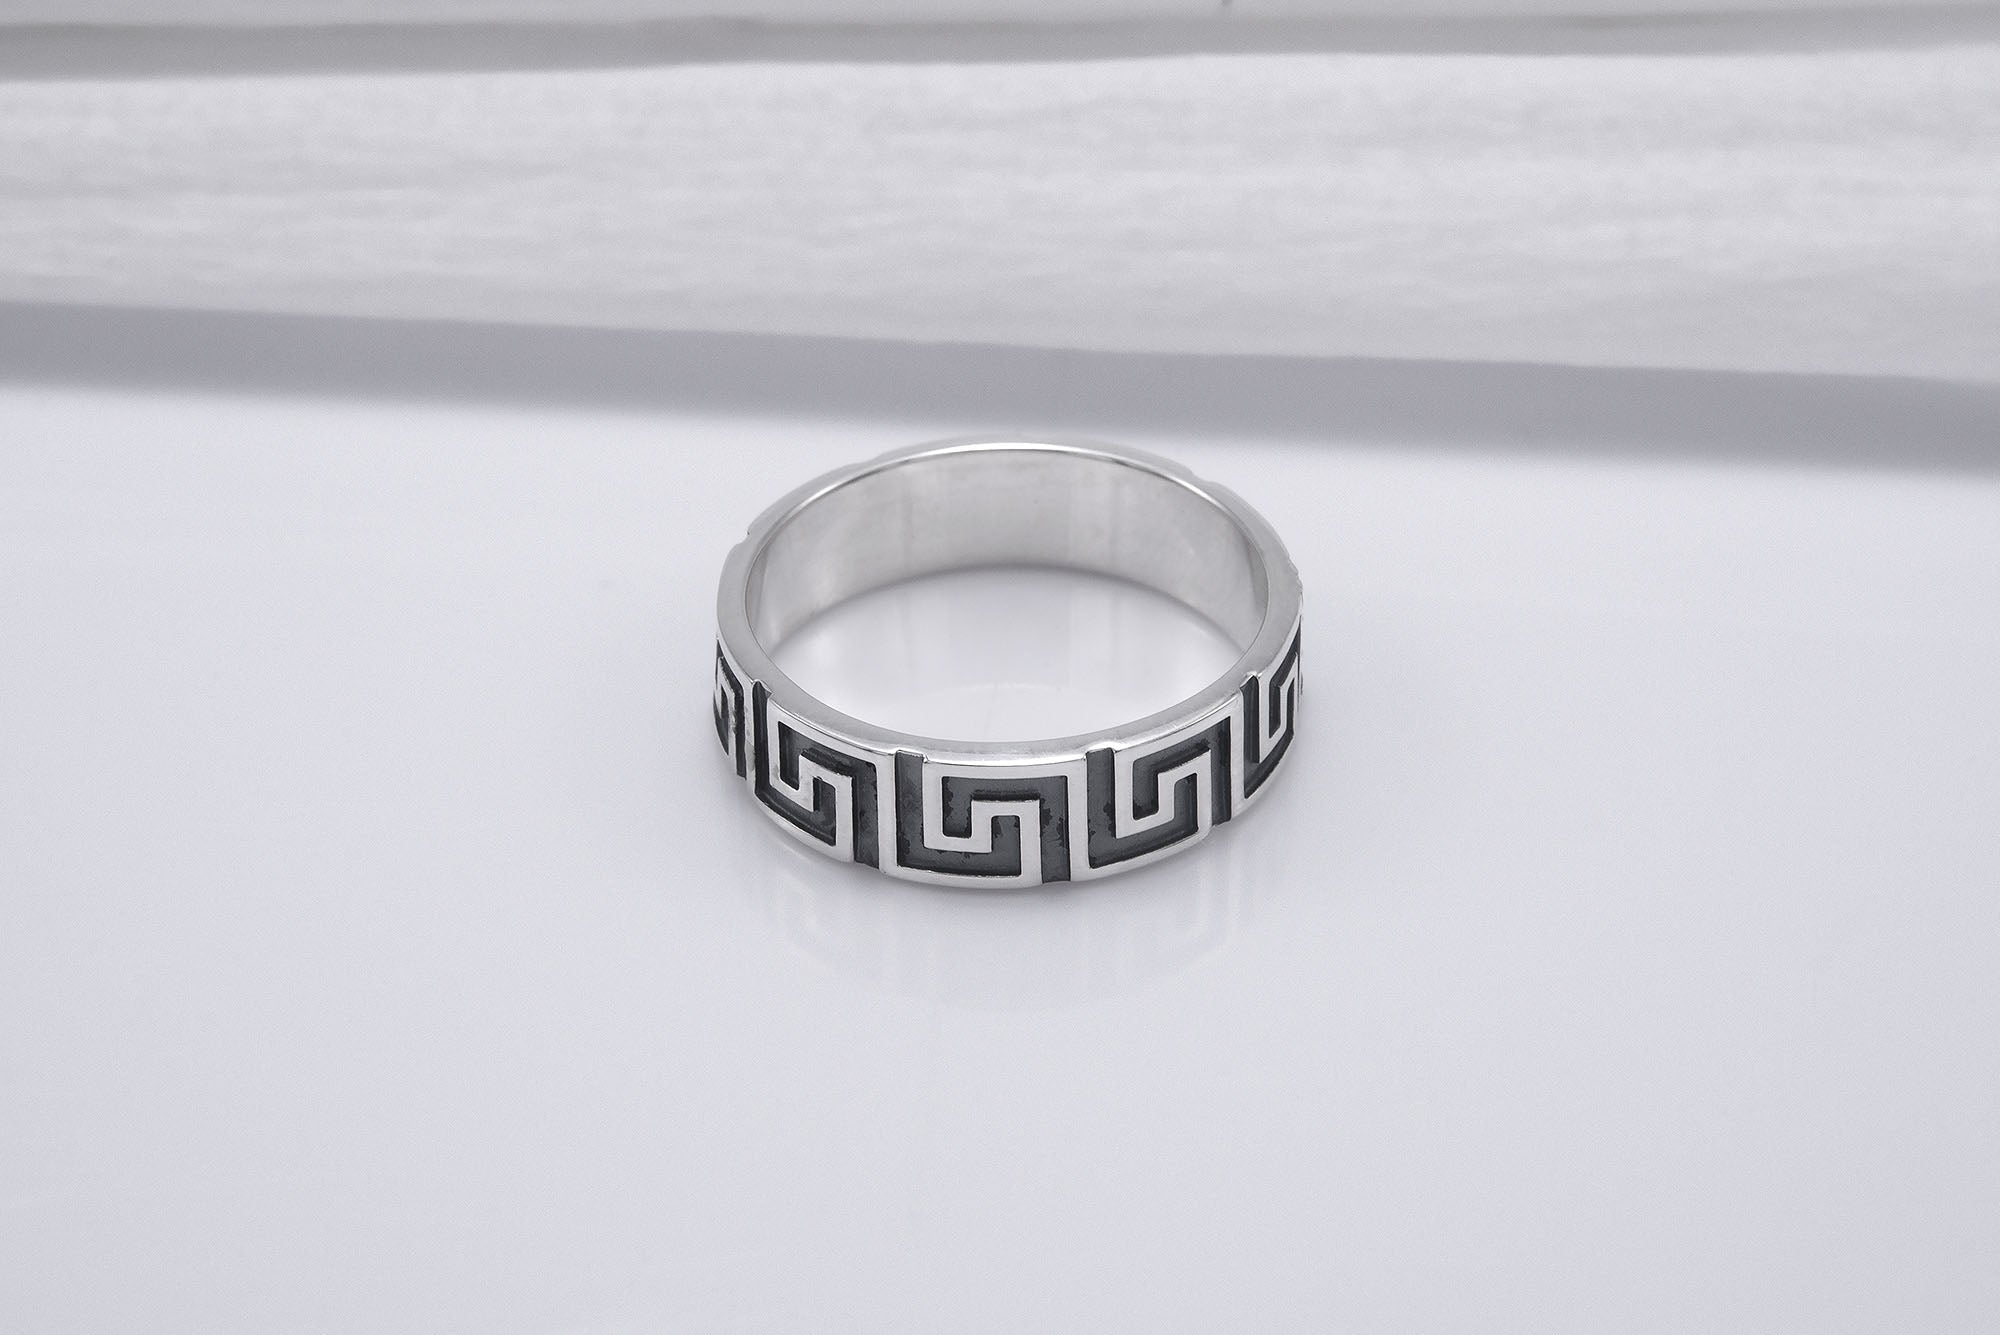 Sterling Silver Meander Ring with Blue Gems, Handmade Greek Jewelry - vikingworkshop